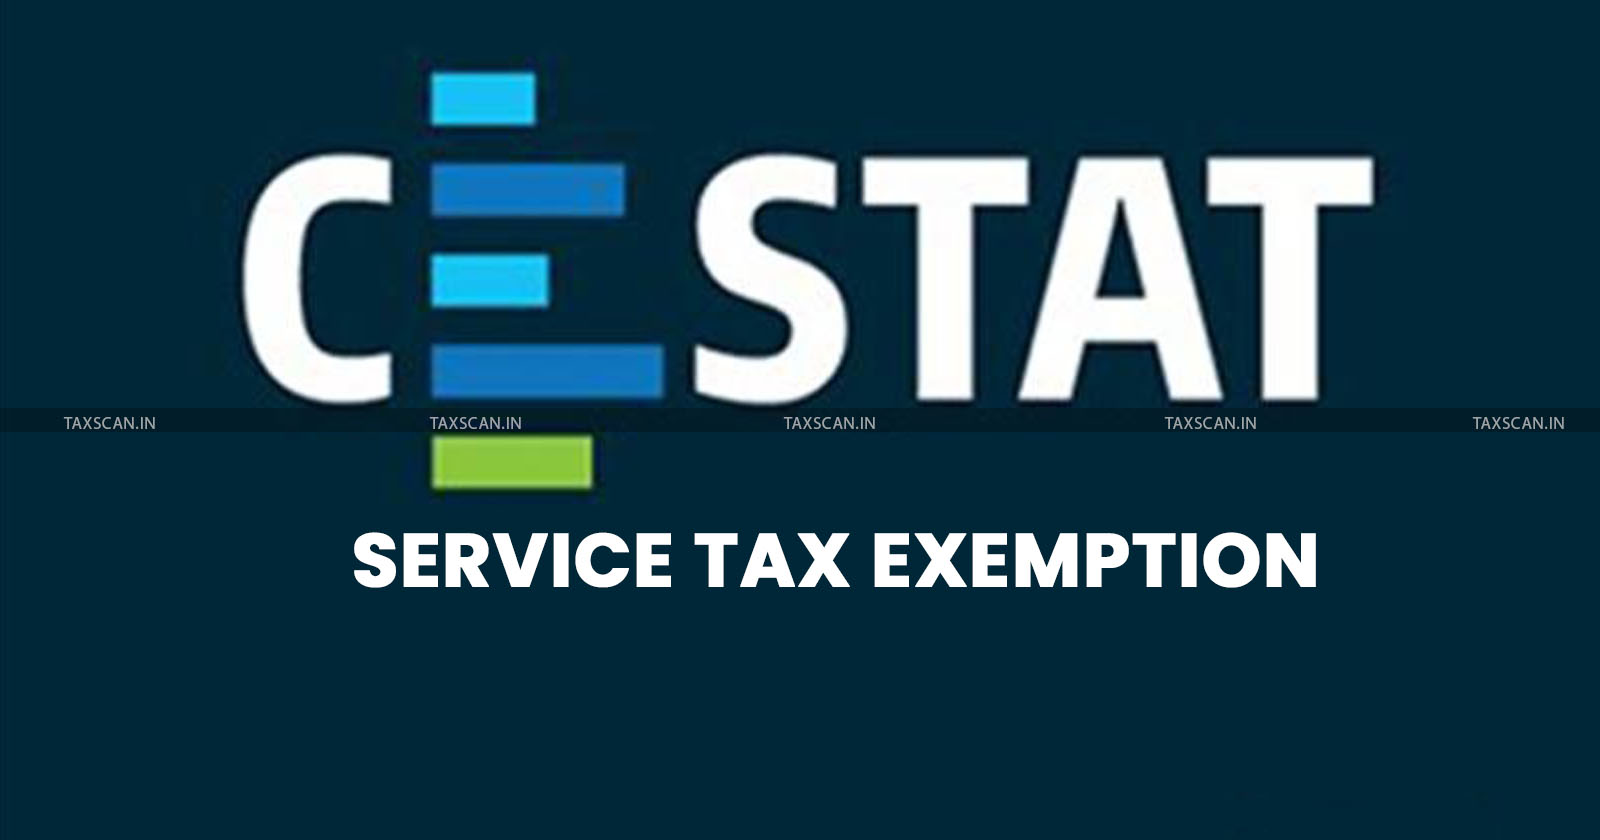 CESTAT - capital goods - notification number - service tax exemption - TAXSCAN